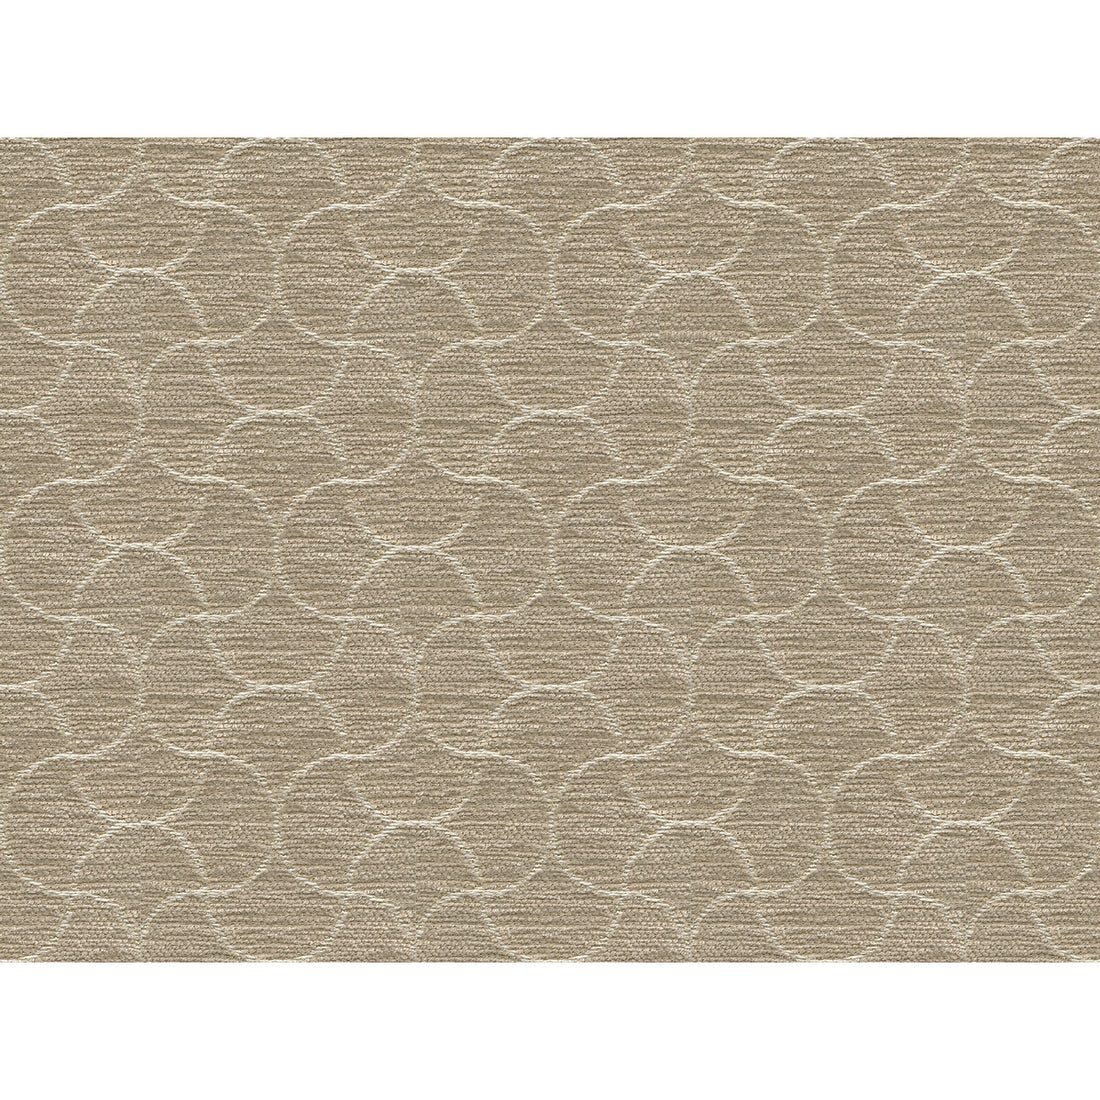 Kravet Smart fabric in 34371-16 color - pattern 34371.16.0 - by Kravet Smart